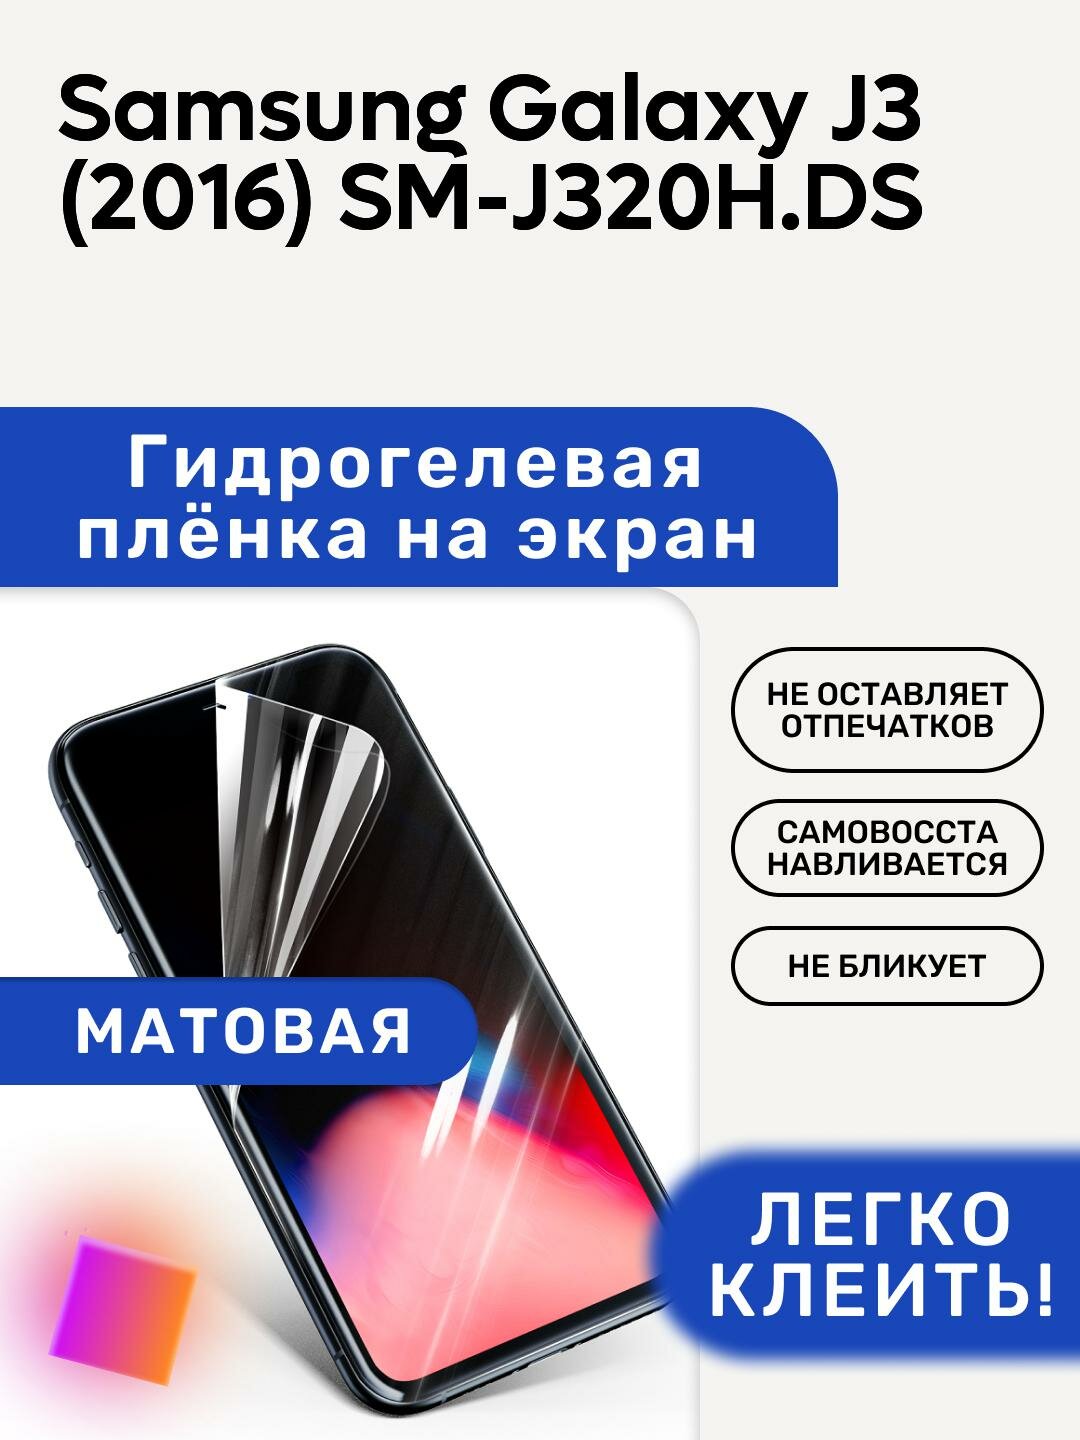 Матовая Гидрогелевая плёнка, полиуретановая, защита экрана Samsung Galaxy J3 (2016) SM-J320H/DS